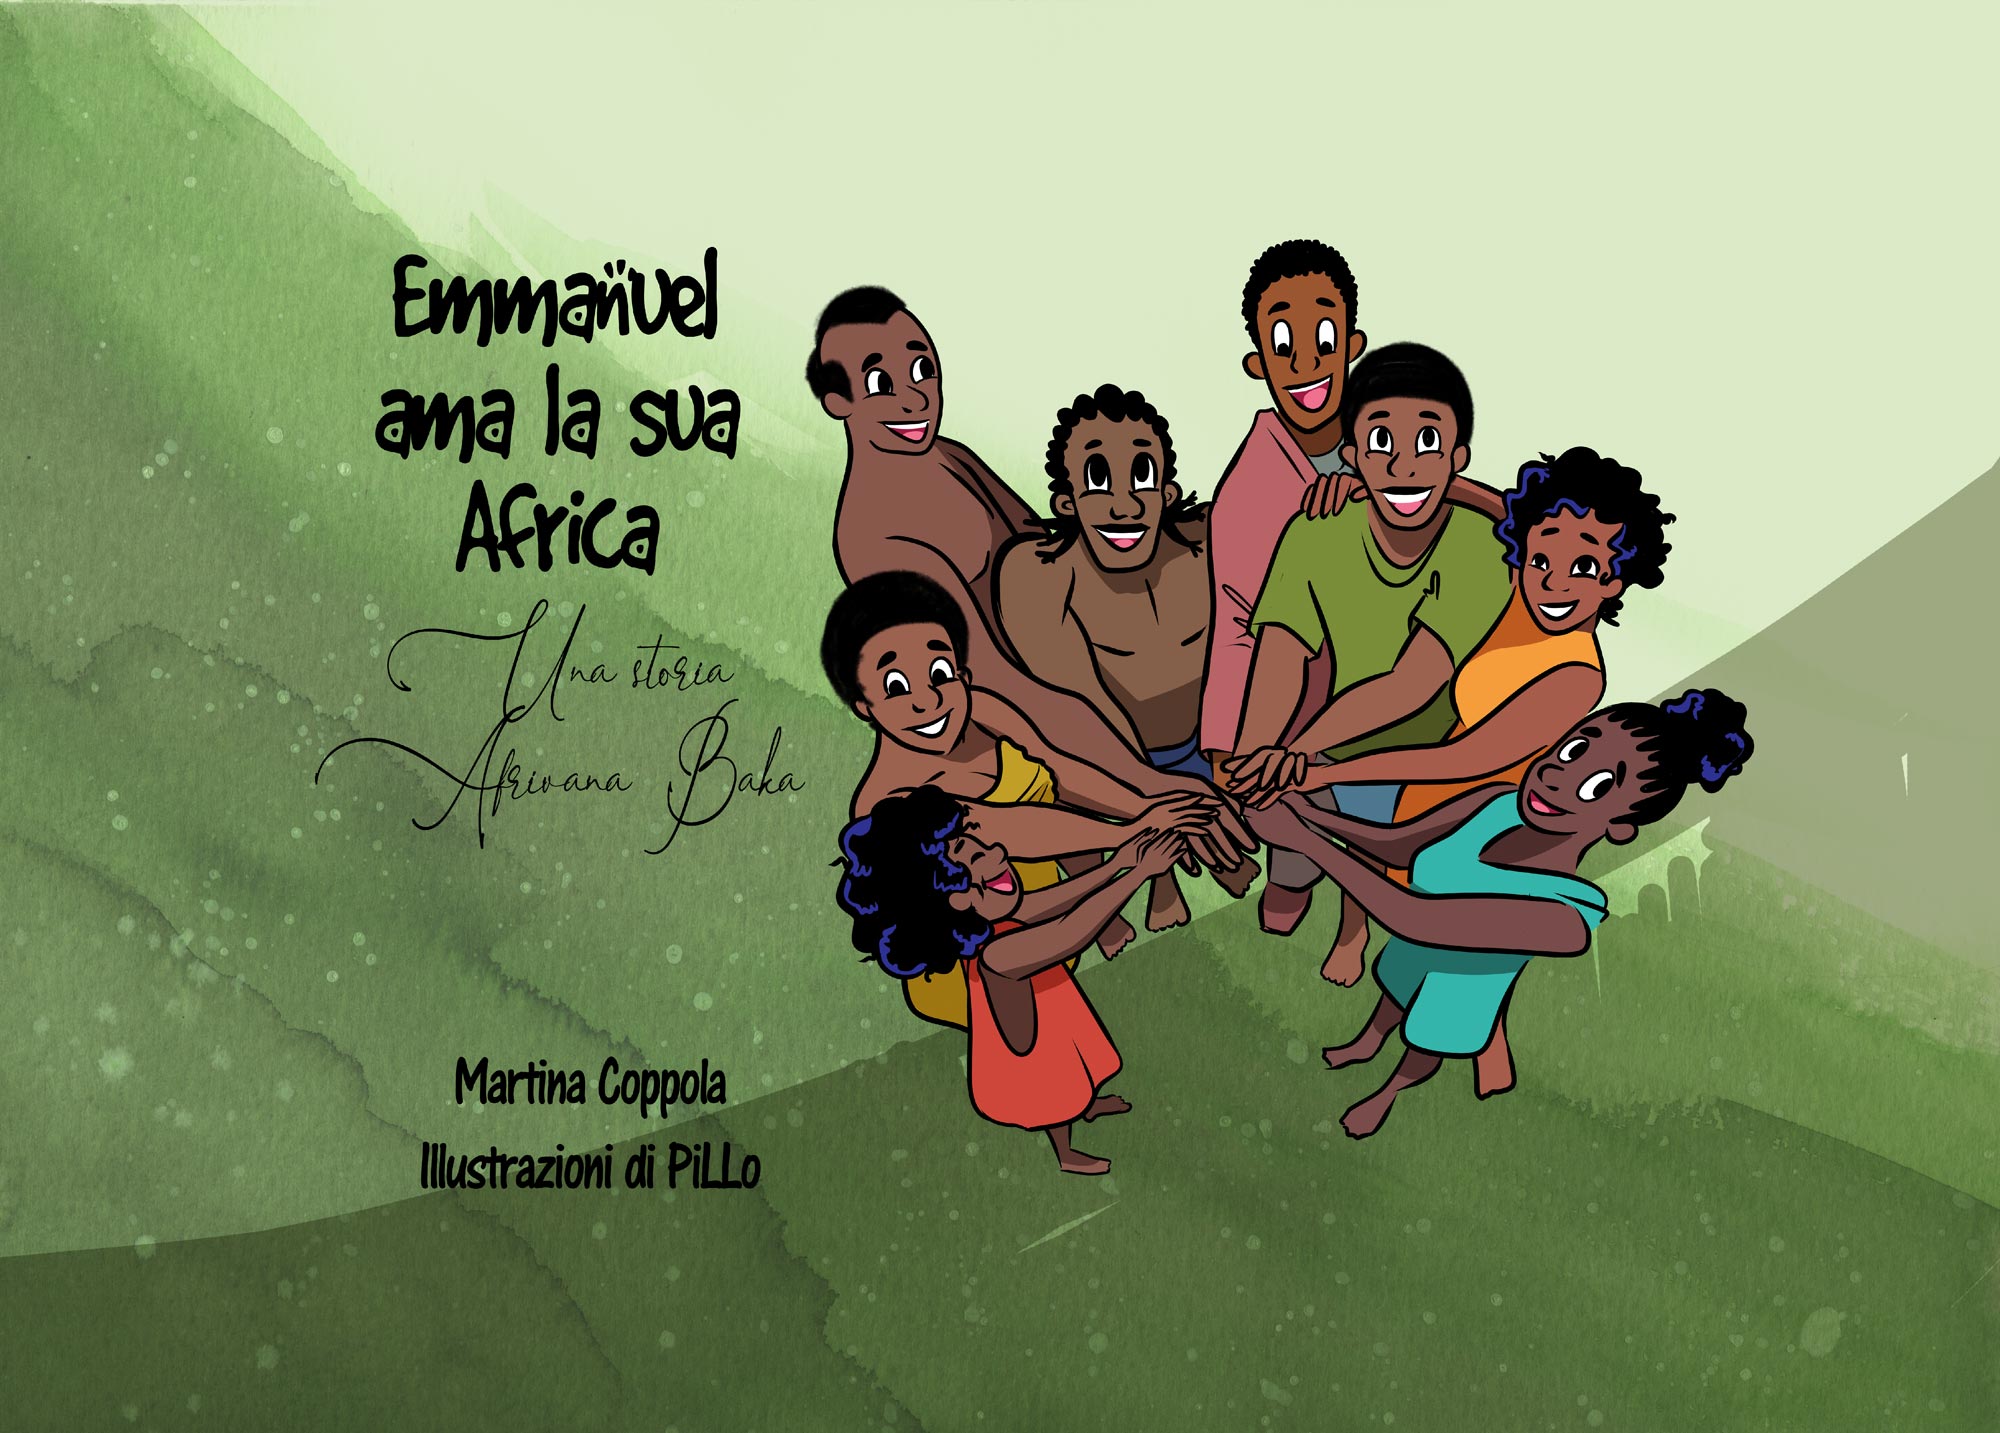 Emmanuel ama la sua Africa, una storia Africana Baka